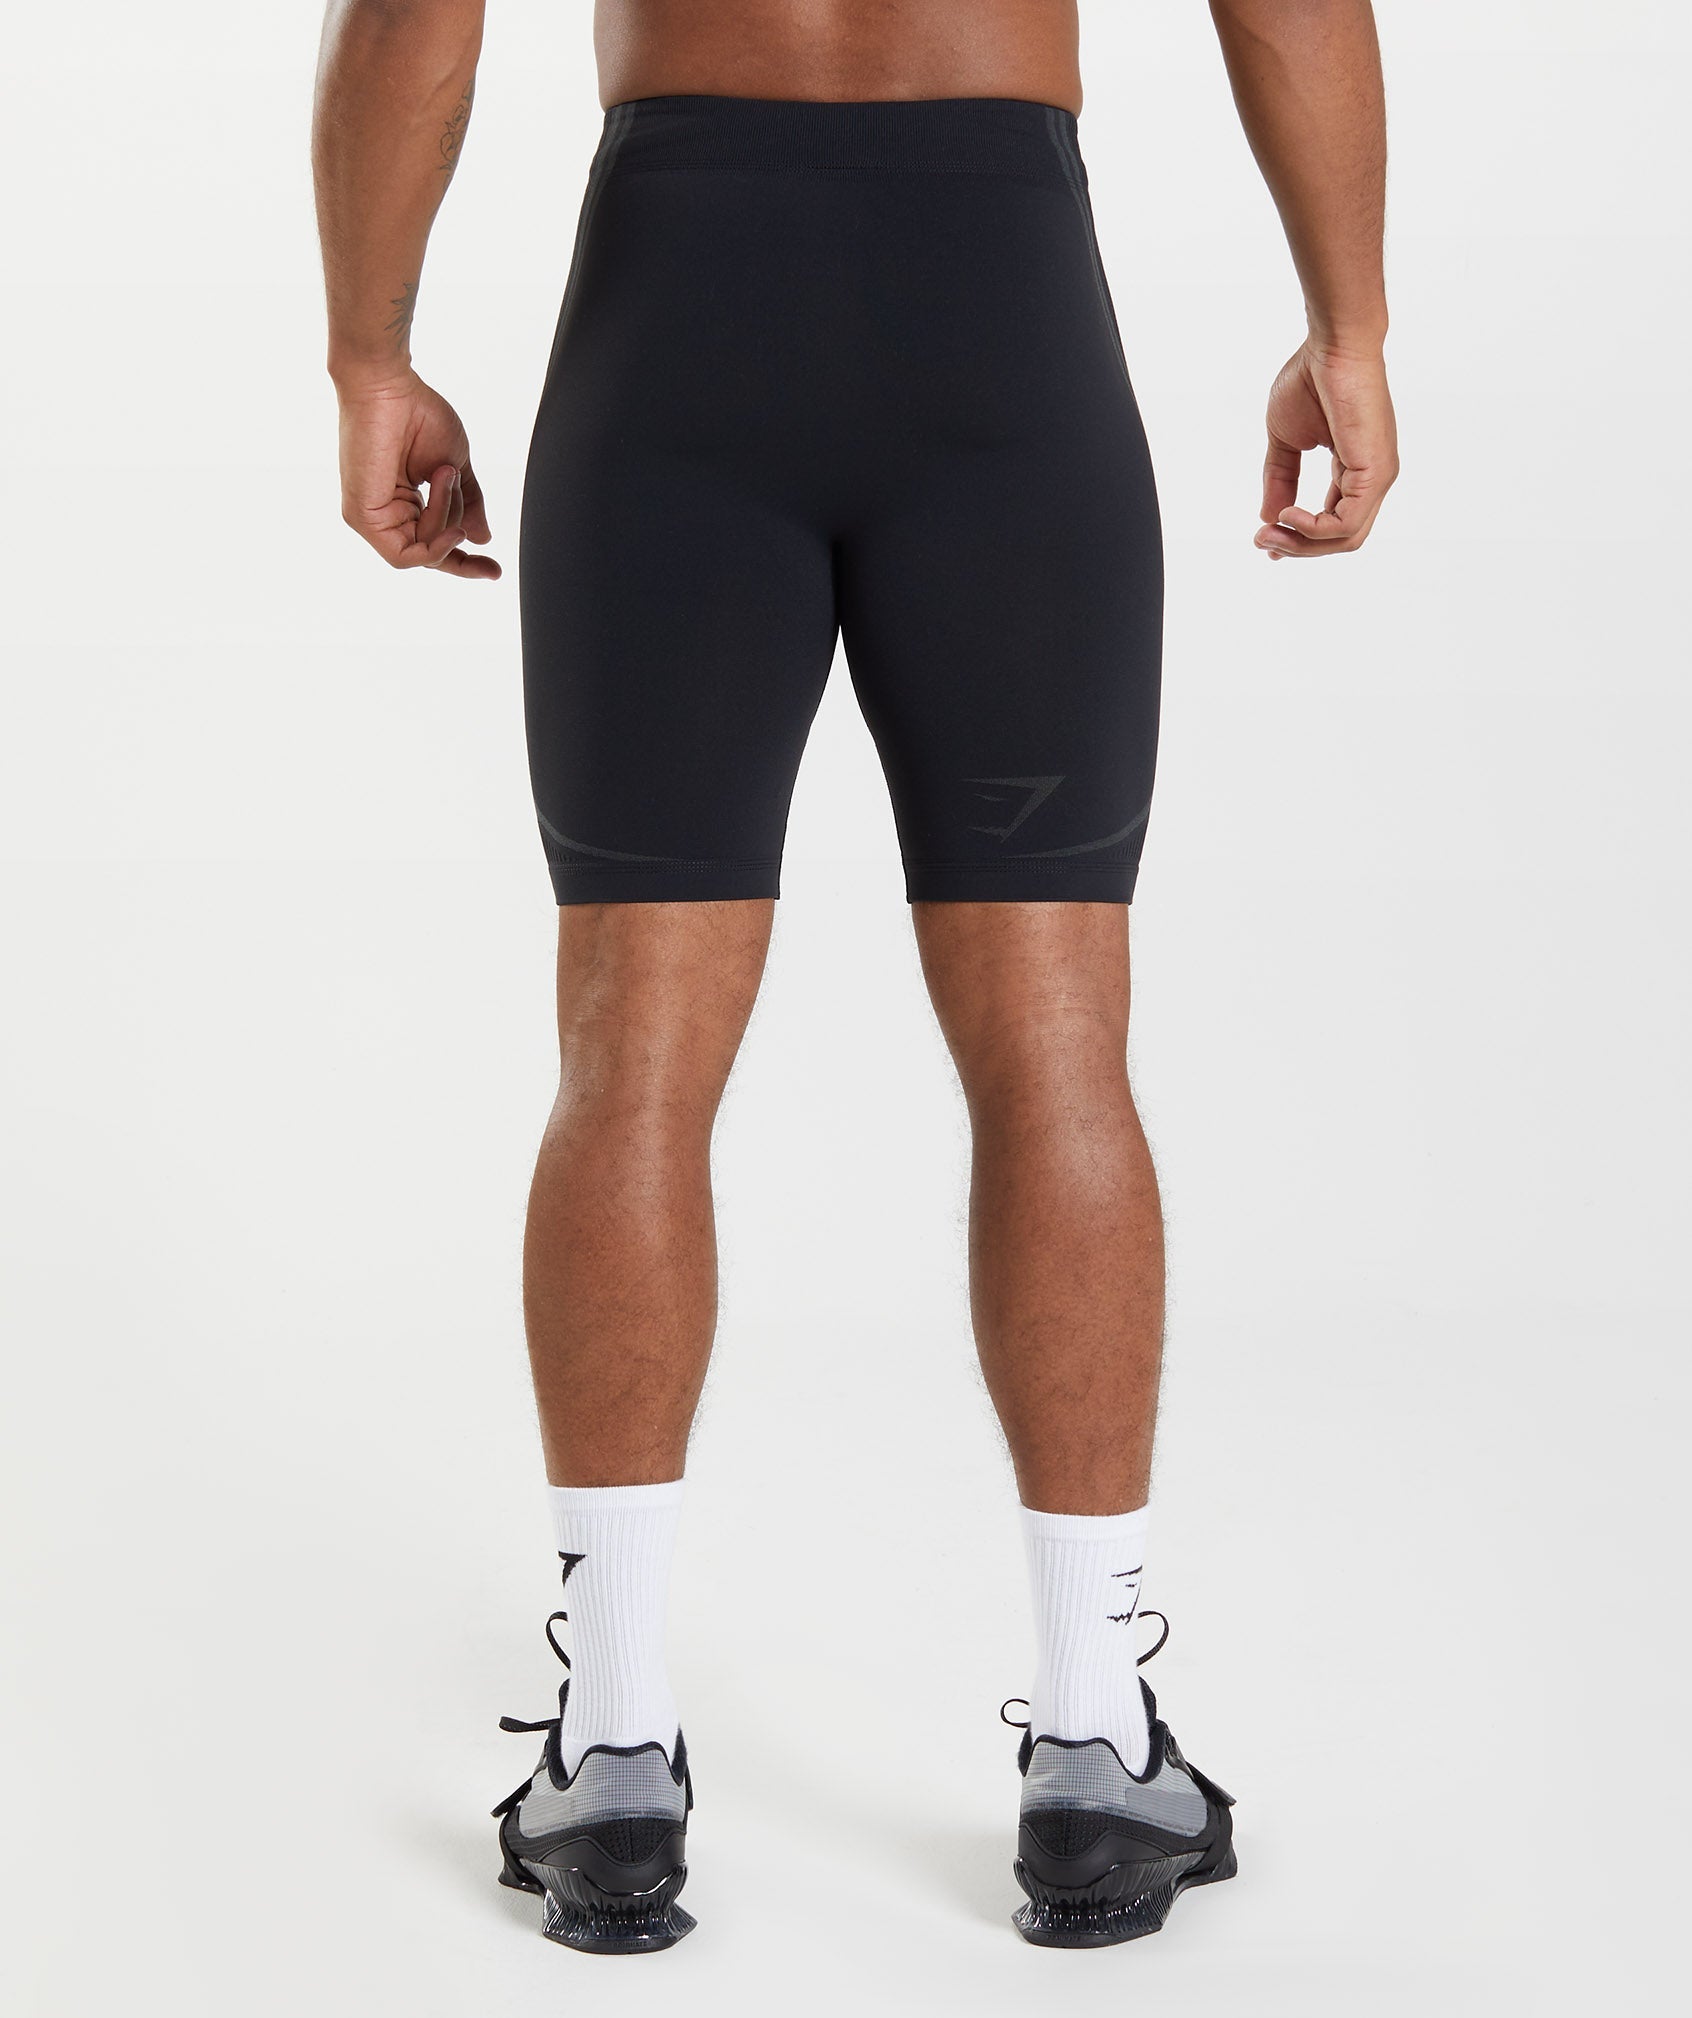 Gymshark Training Short Length Shorts - Charcoal